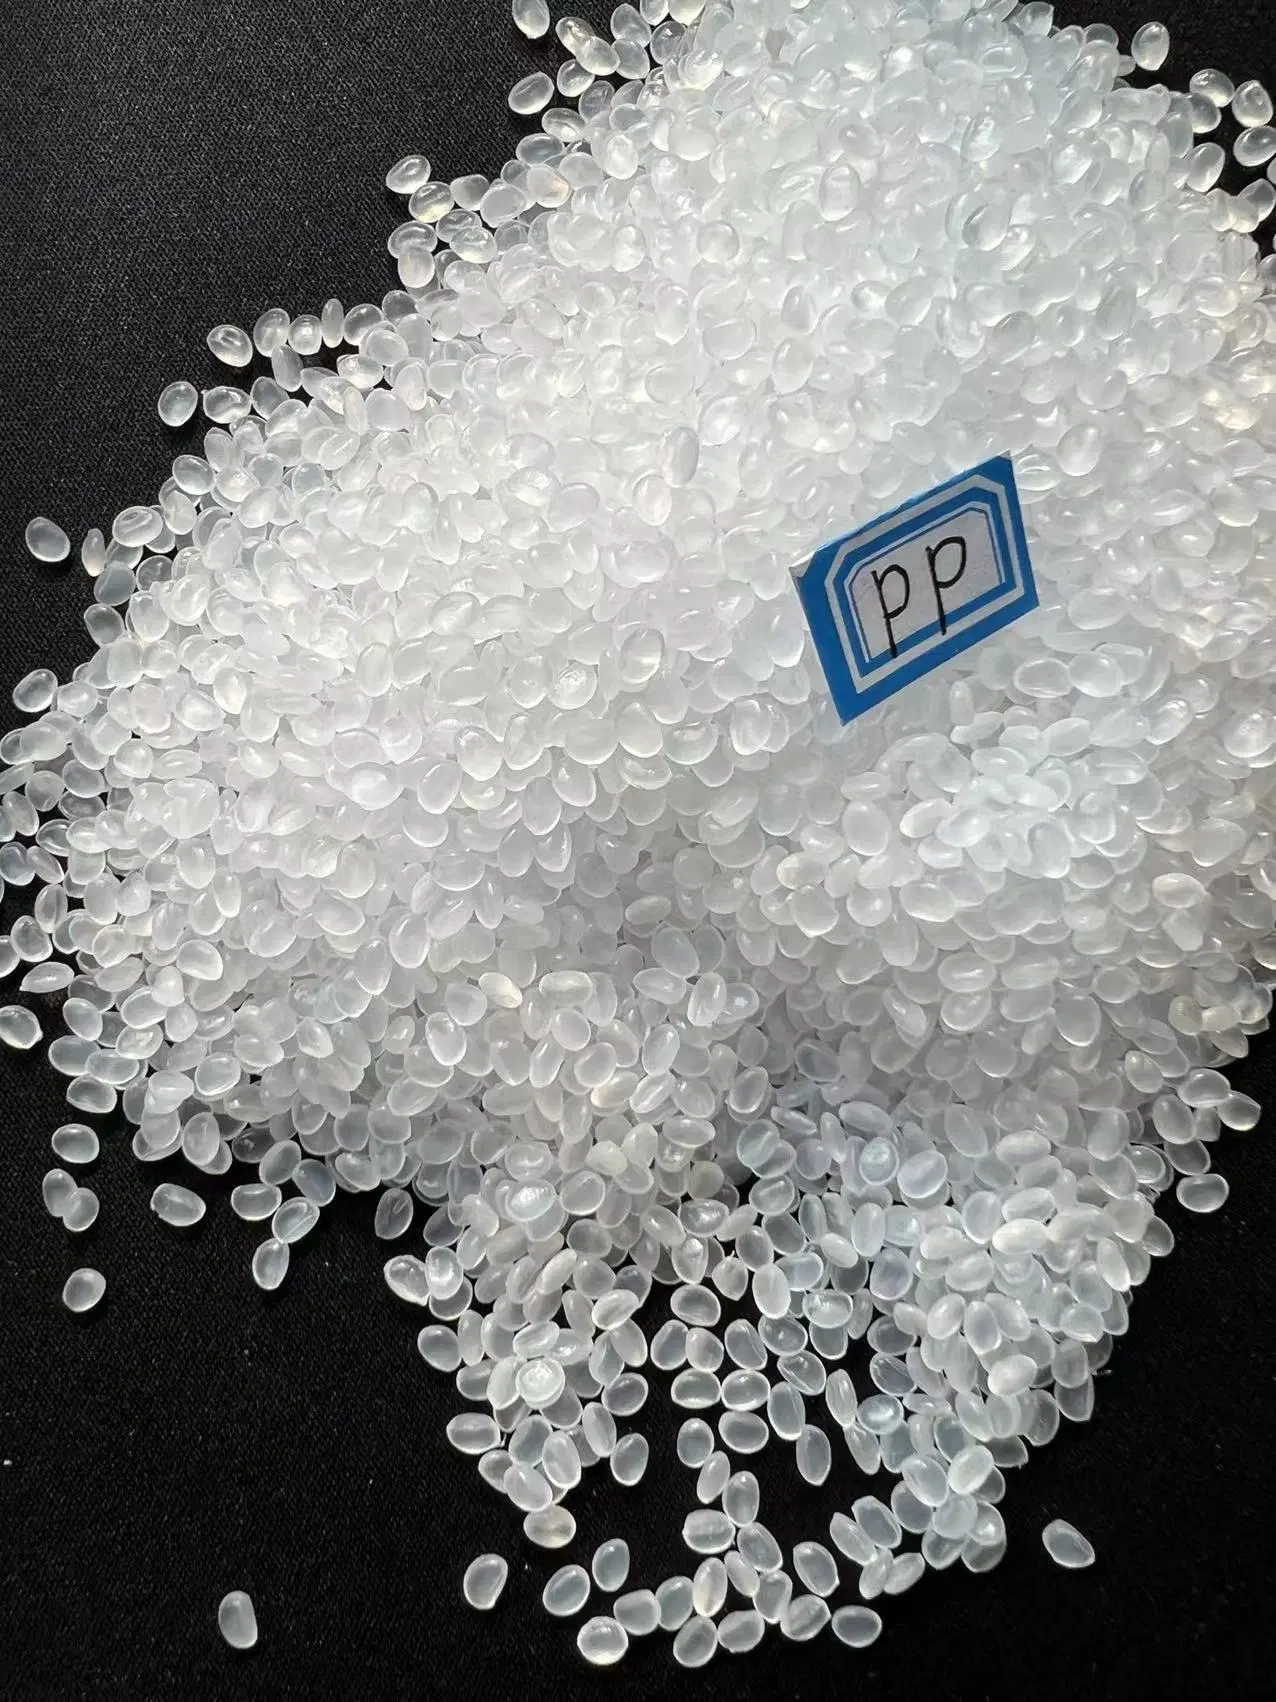 Polypropylene Plastic Resin 5090t Recycled PP Granules